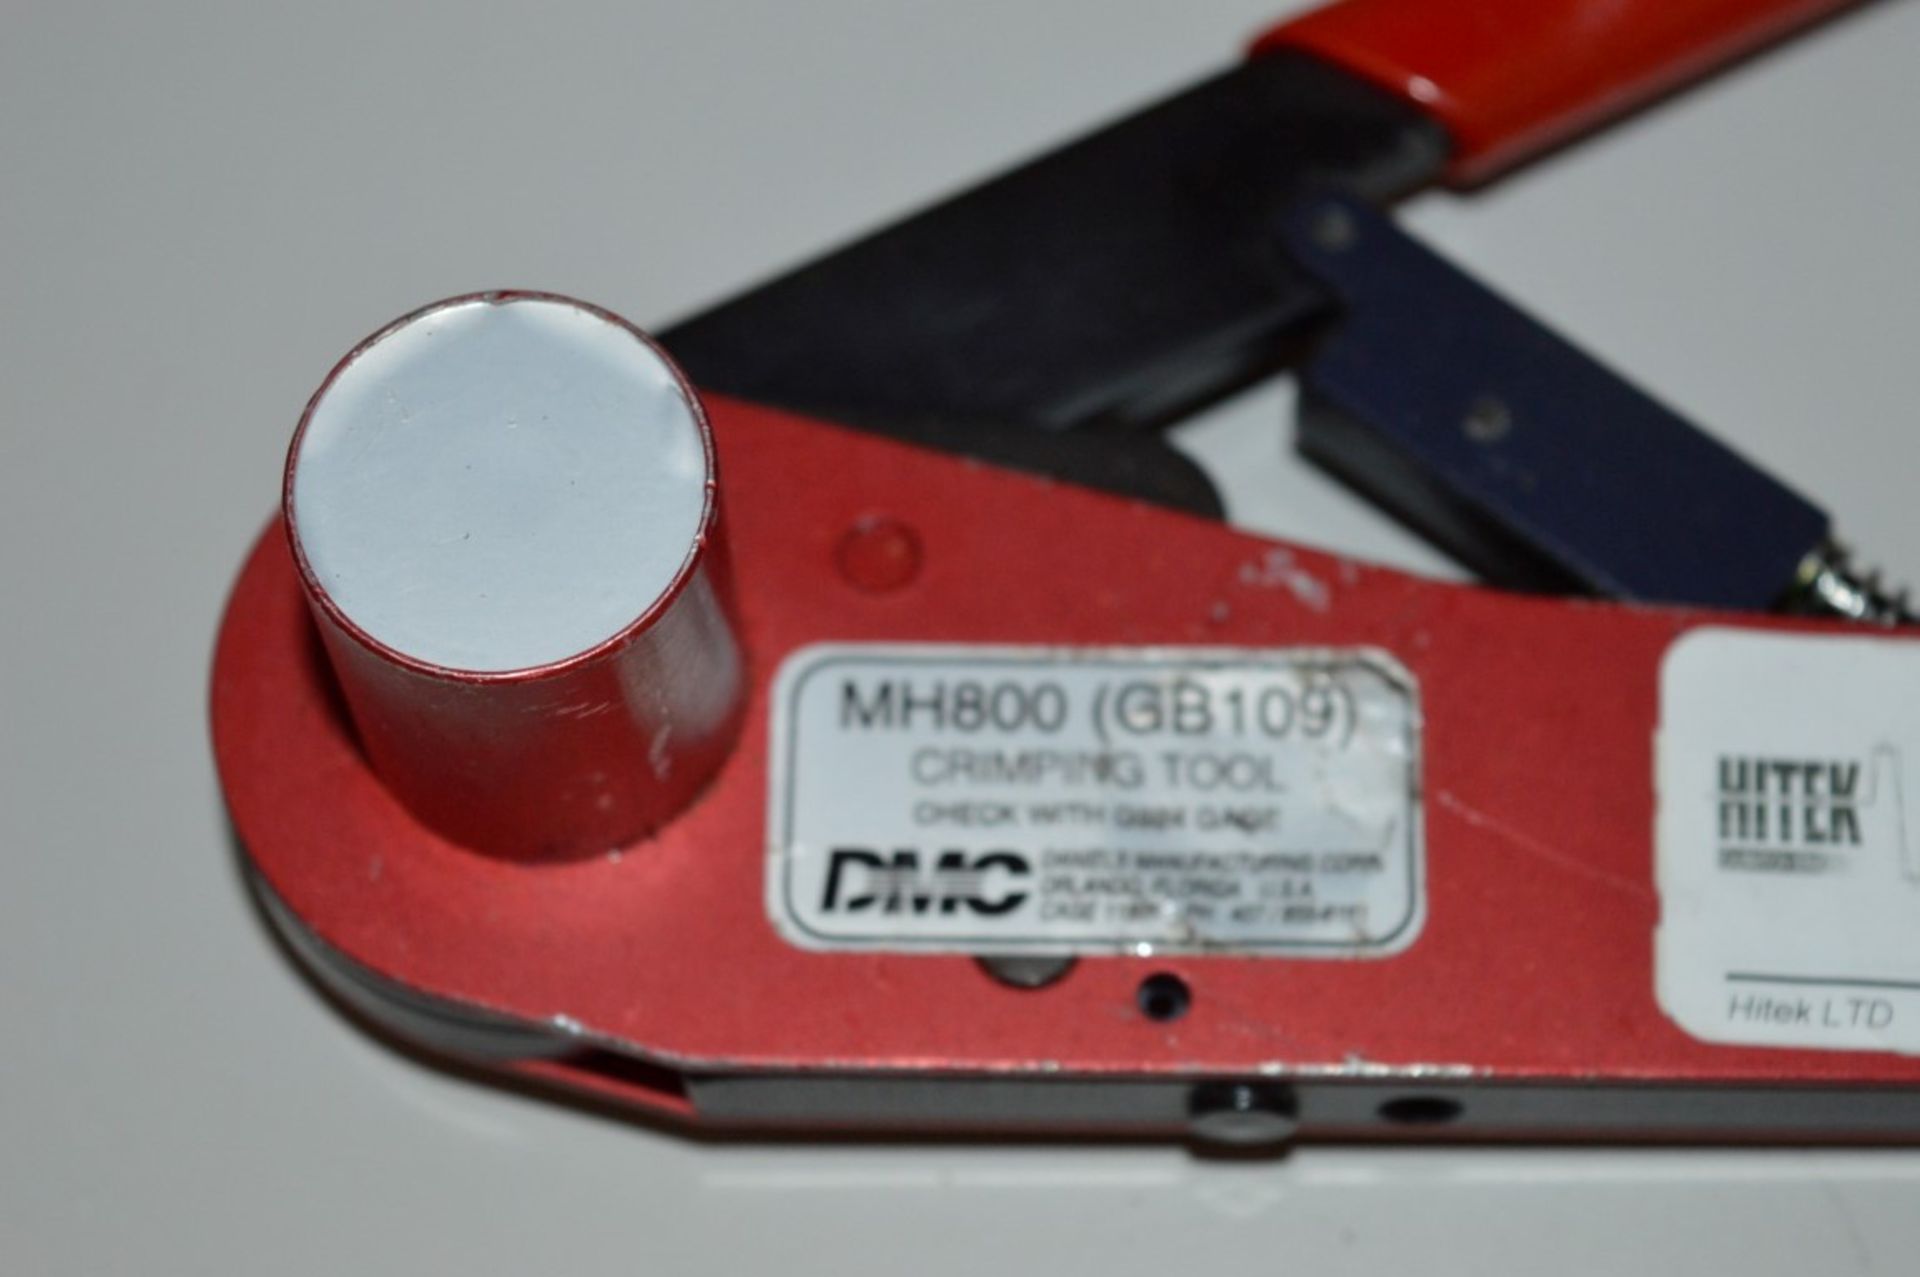 1 x DMC Crimp Tool MH800 (GB109) - Calibarated Until 21st March 2016 - Ultra precision crimp tool - Image 7 of 10